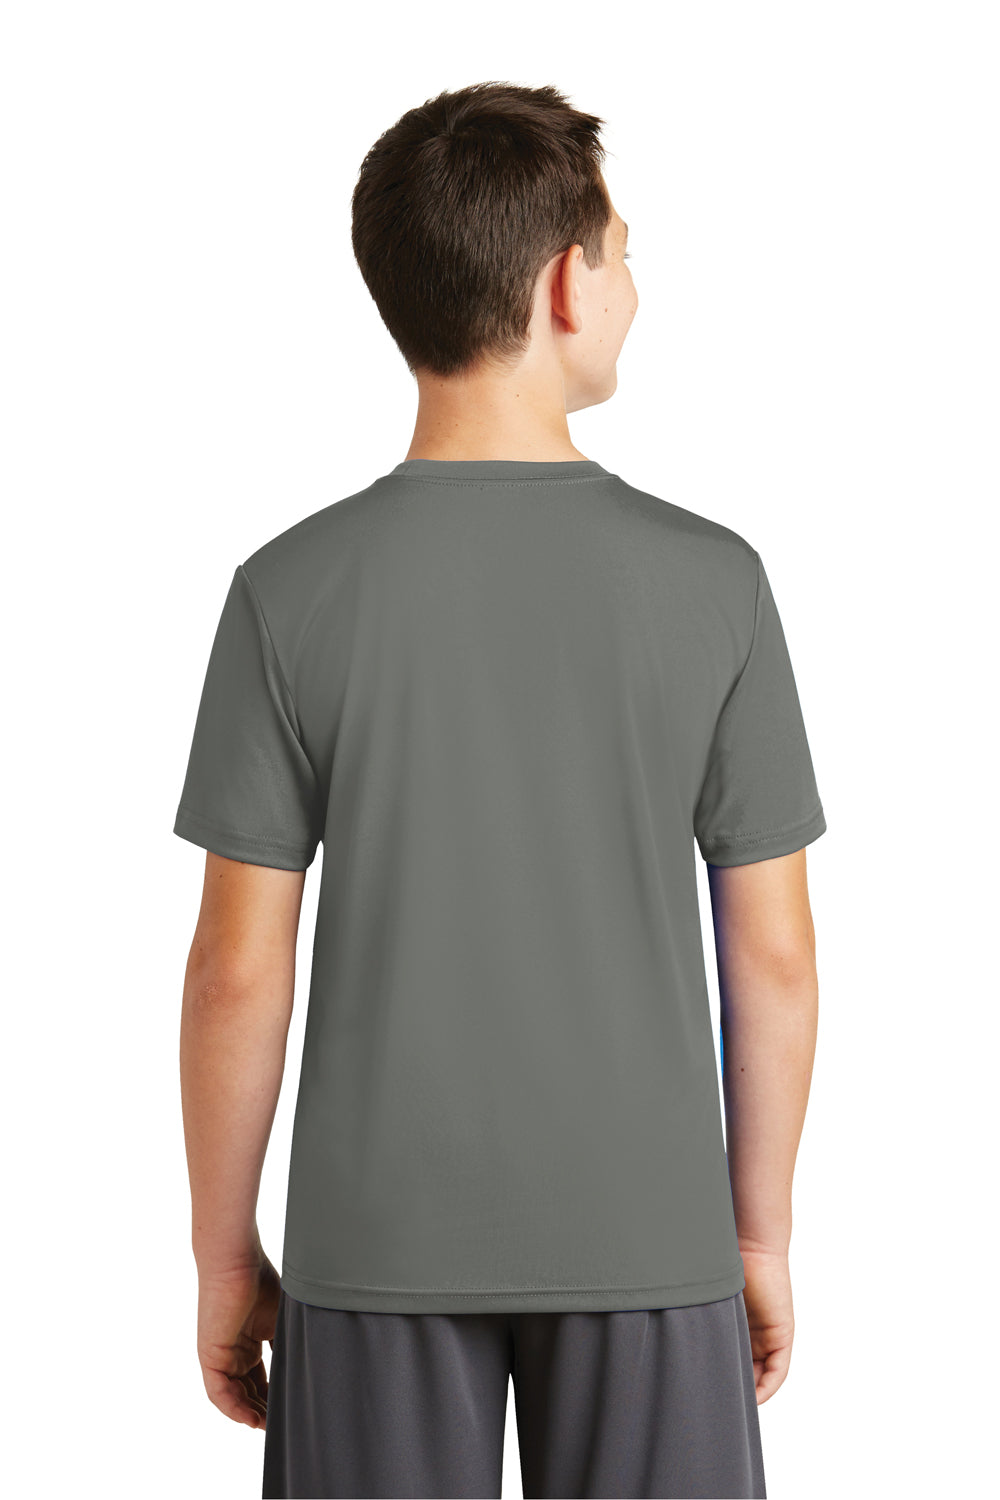 Sport-Tek YST320 Youth Tough Moisture Wicking Short Sleeve Crewneck T-Shirt Dark Grey Back